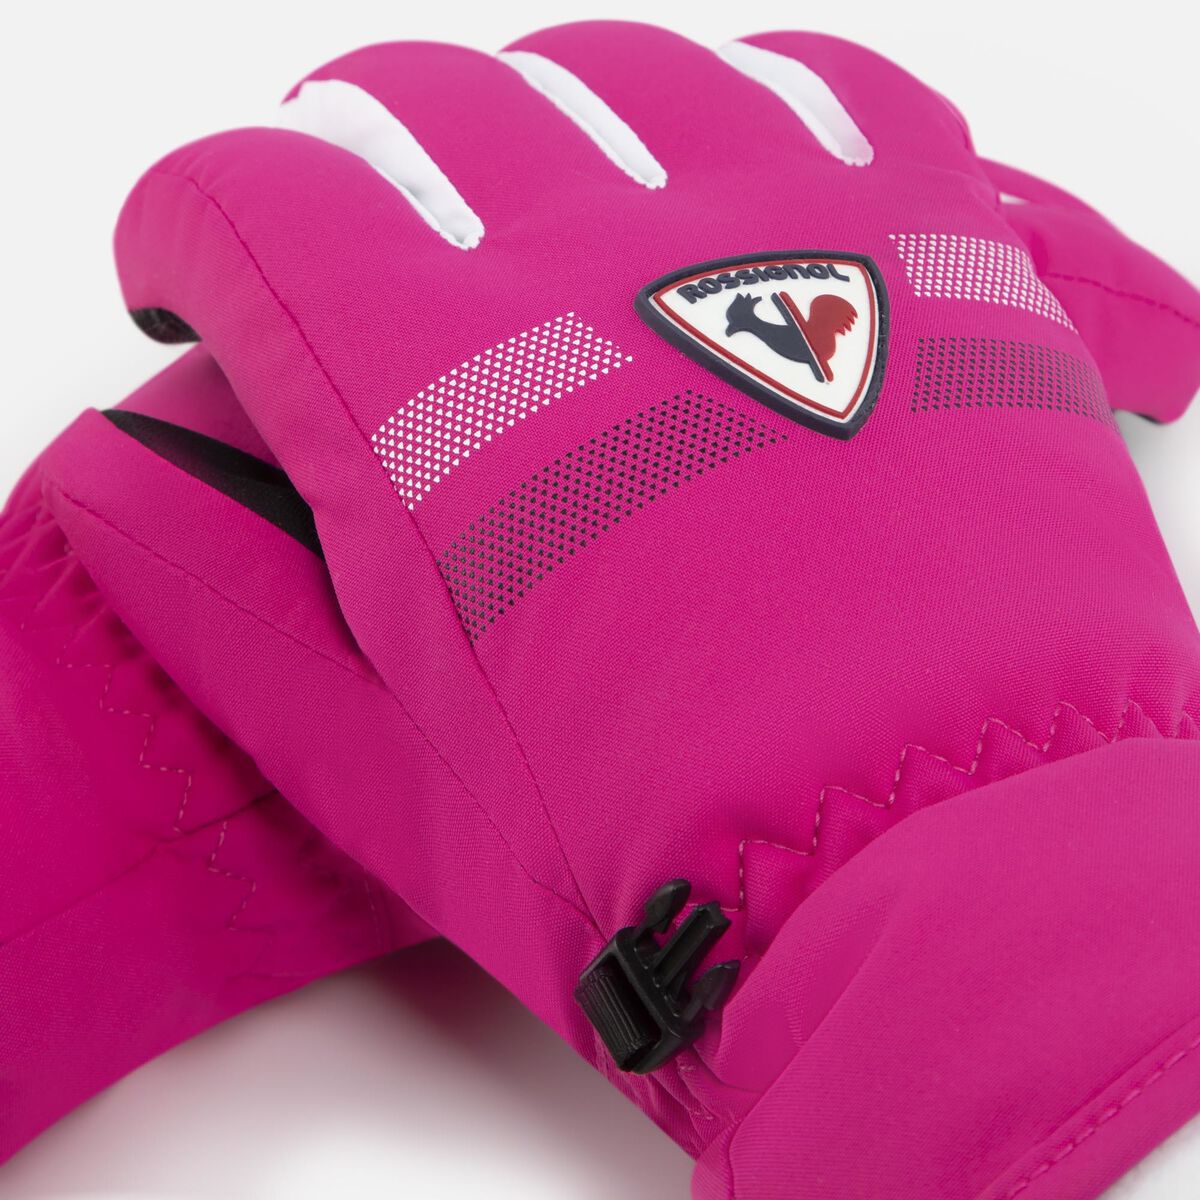 Juniors' ROC waterproof ski gloves